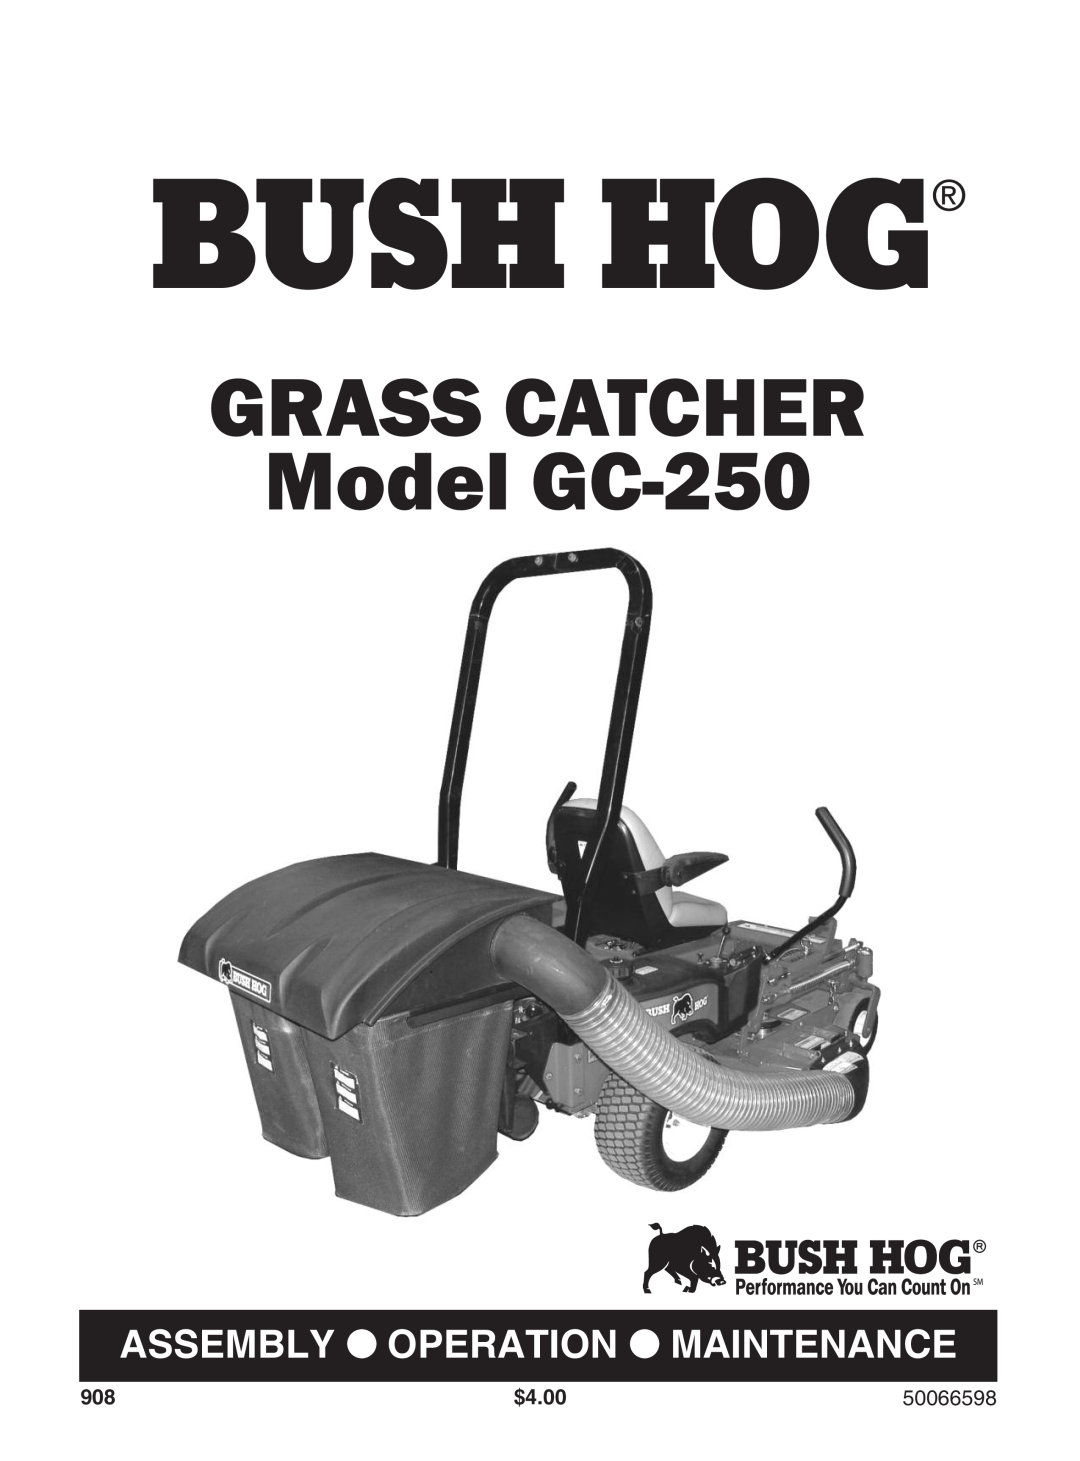 Bush Hog manual $4.00, 50066598, Bush Hog, GRASS CATCHER Model GC-250, Assembly Operation Maintenance 